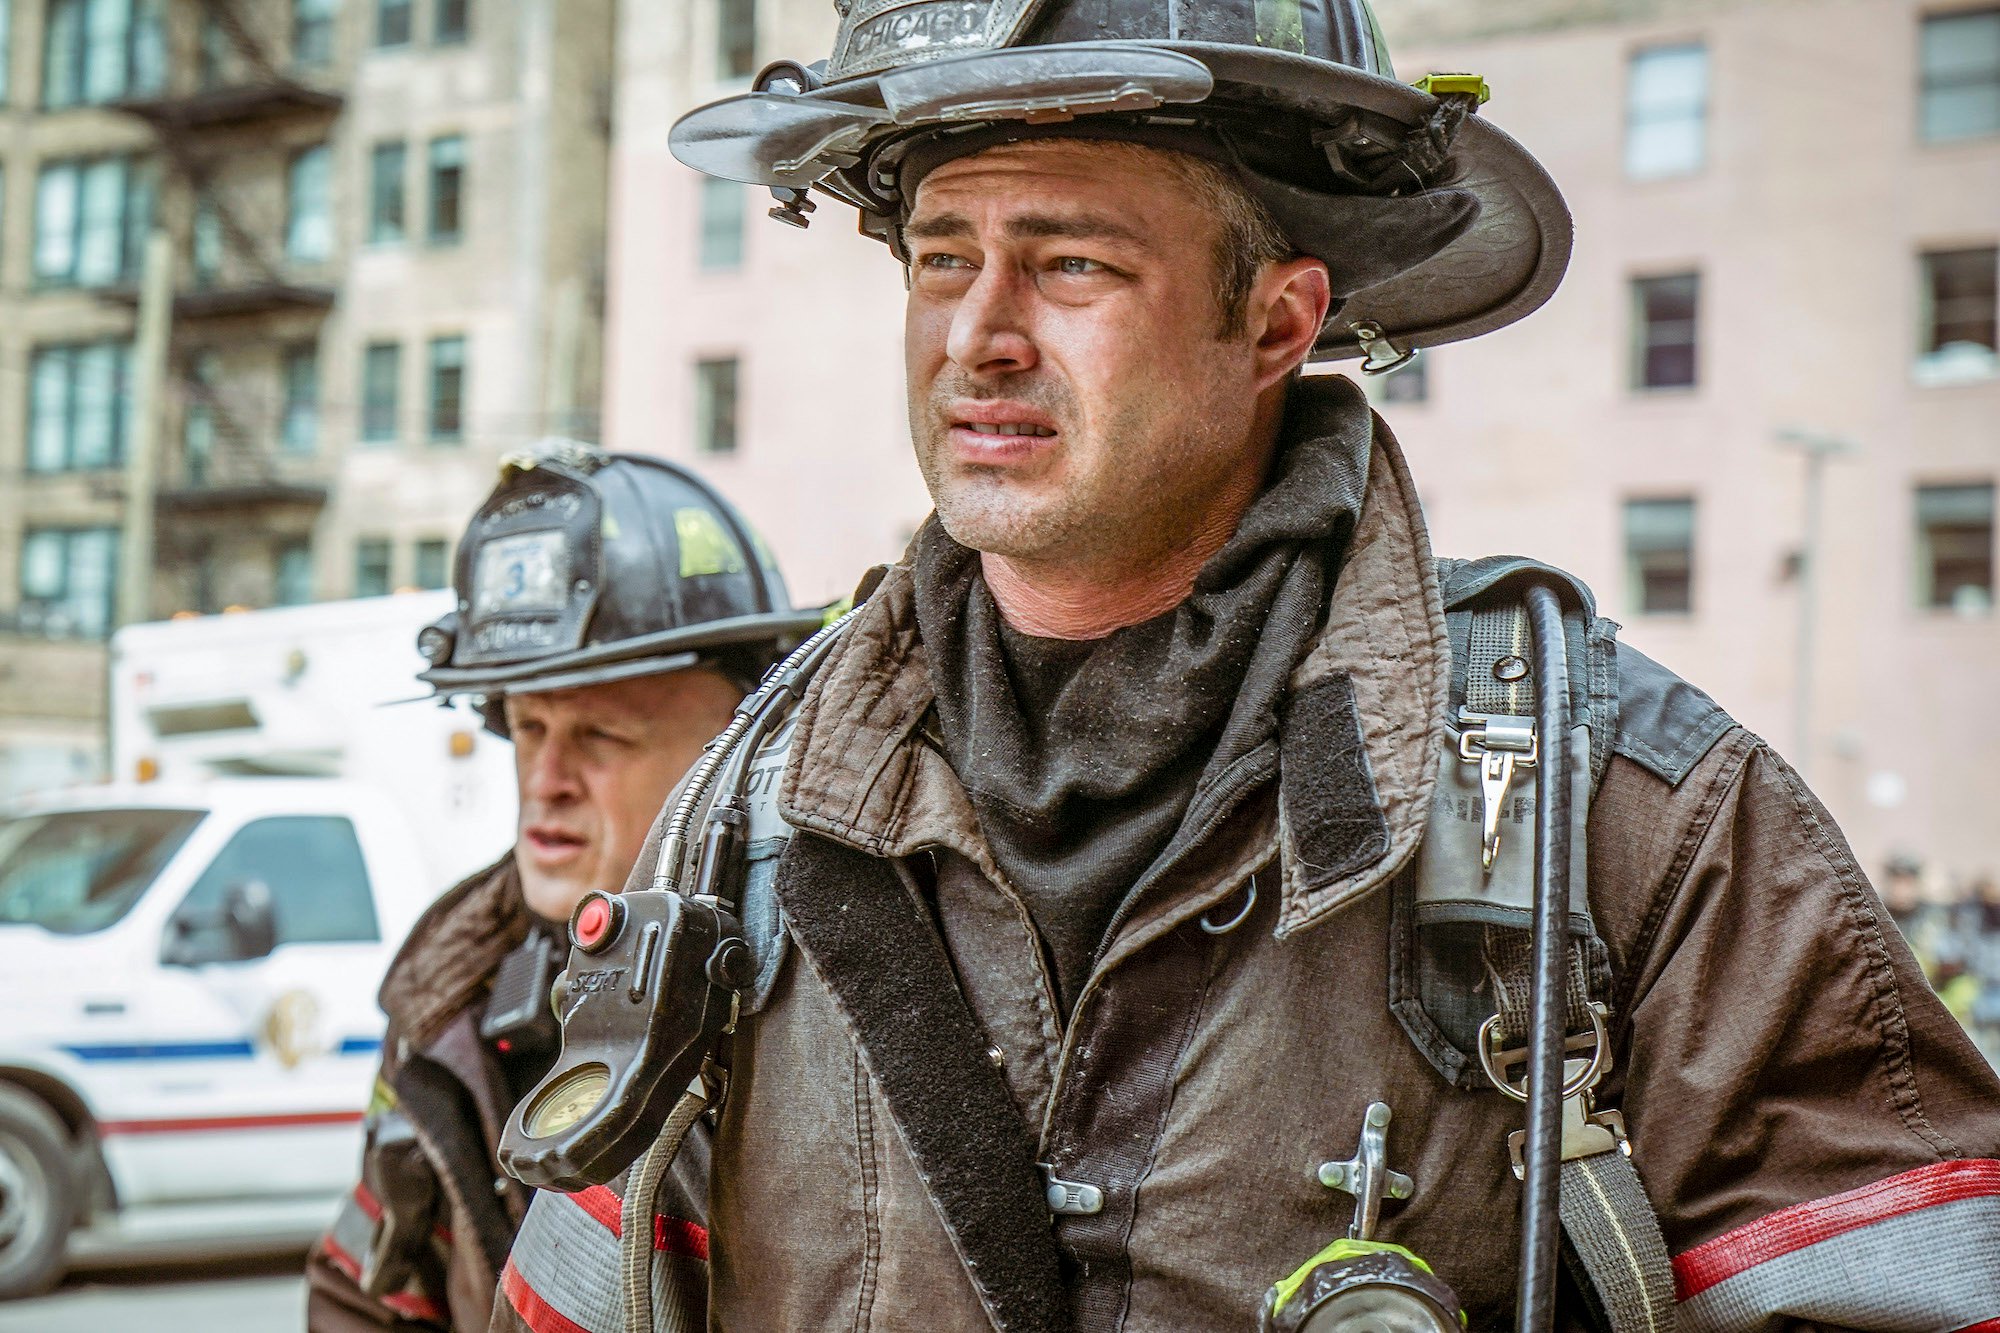 Taylor Kinney in 'Chicago Fire' wearing a firefighter uniform